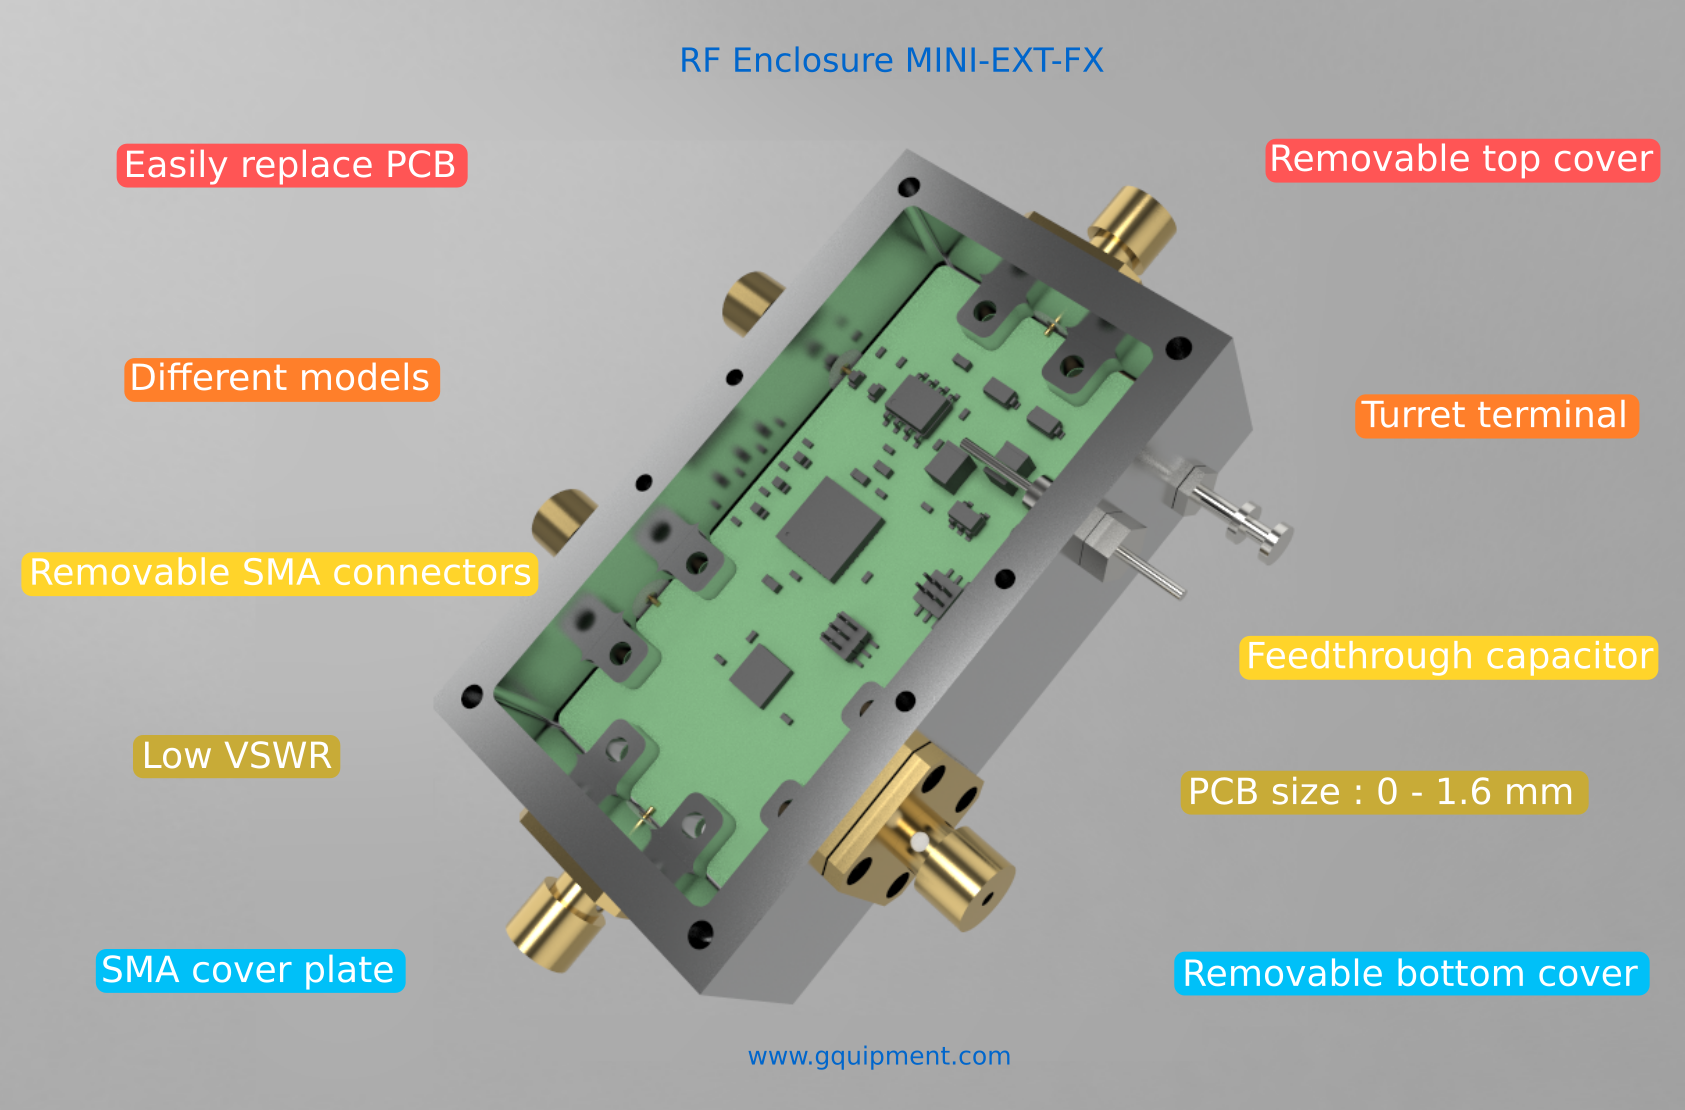 RF-Enclosure EXT-FX infographic